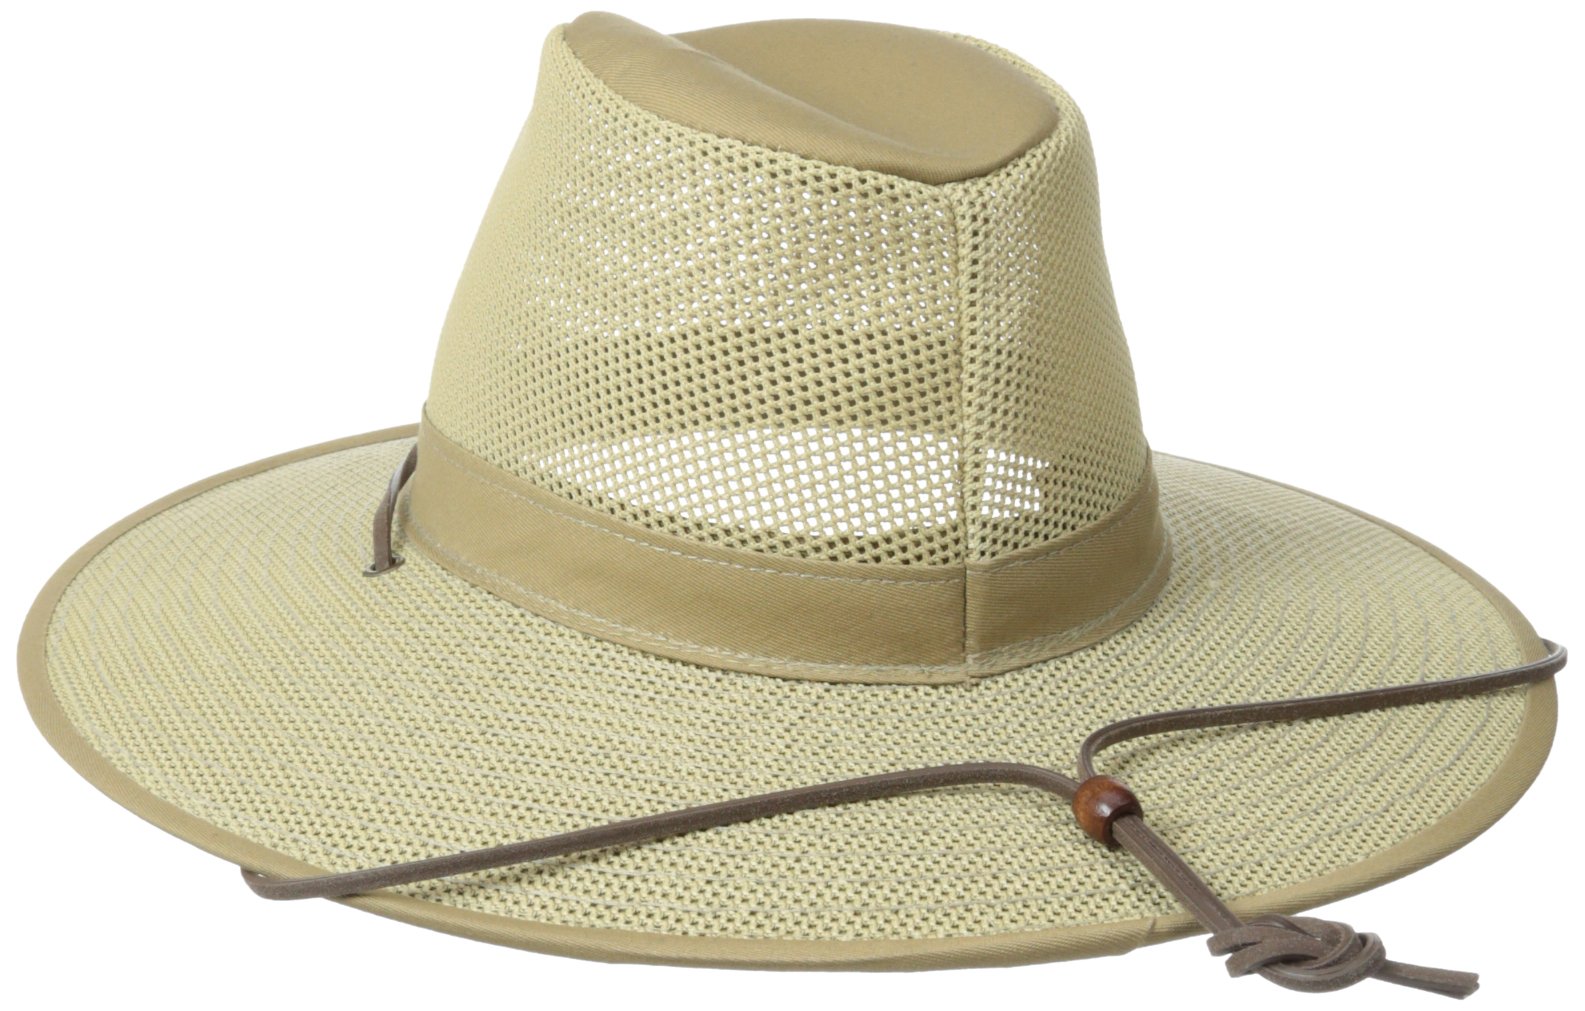 Henschel Hats Aussie Breezer Hat - Sun Protection & Crushable Soft Mesh Hat - Outdoor Men's Summer Hat with Adjustable String  - Like New